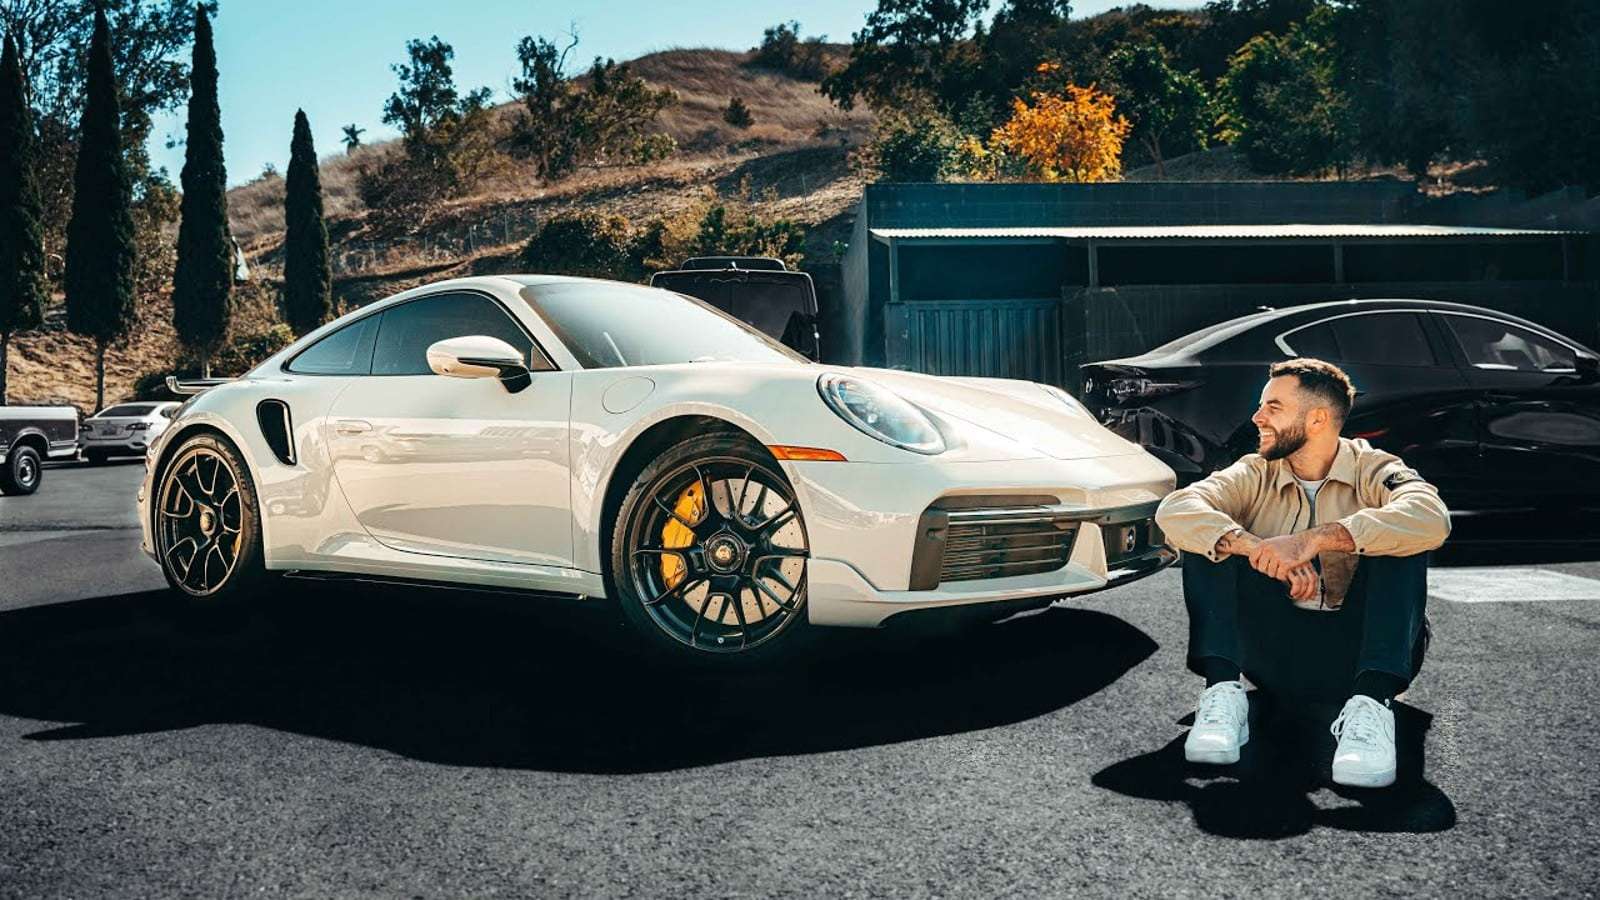 Nadeshot sitting in front of his new Porsche